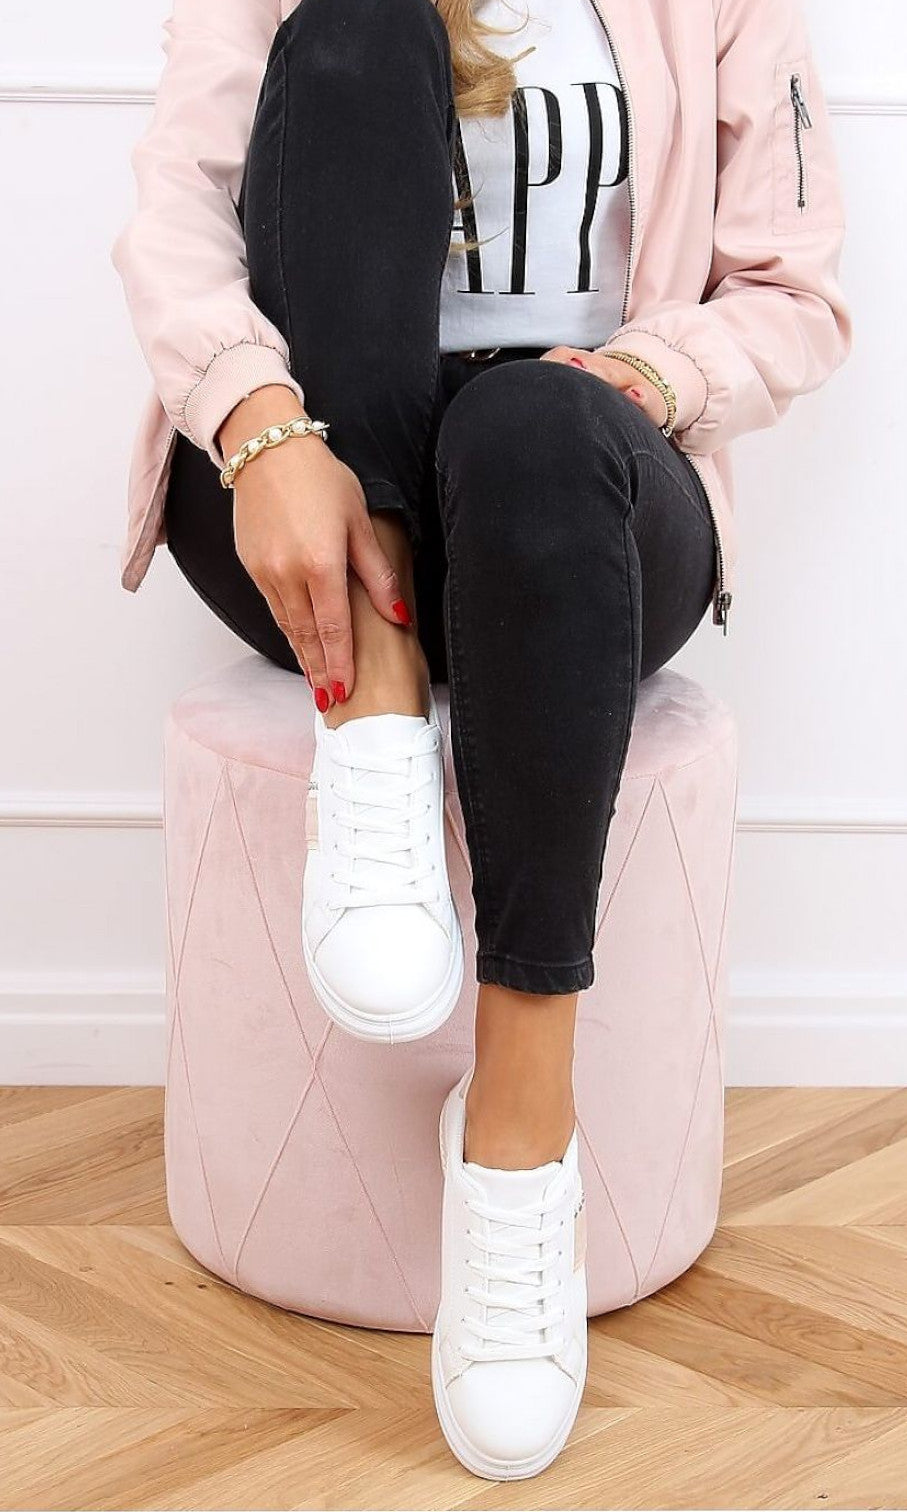 Sneaker White/Pink